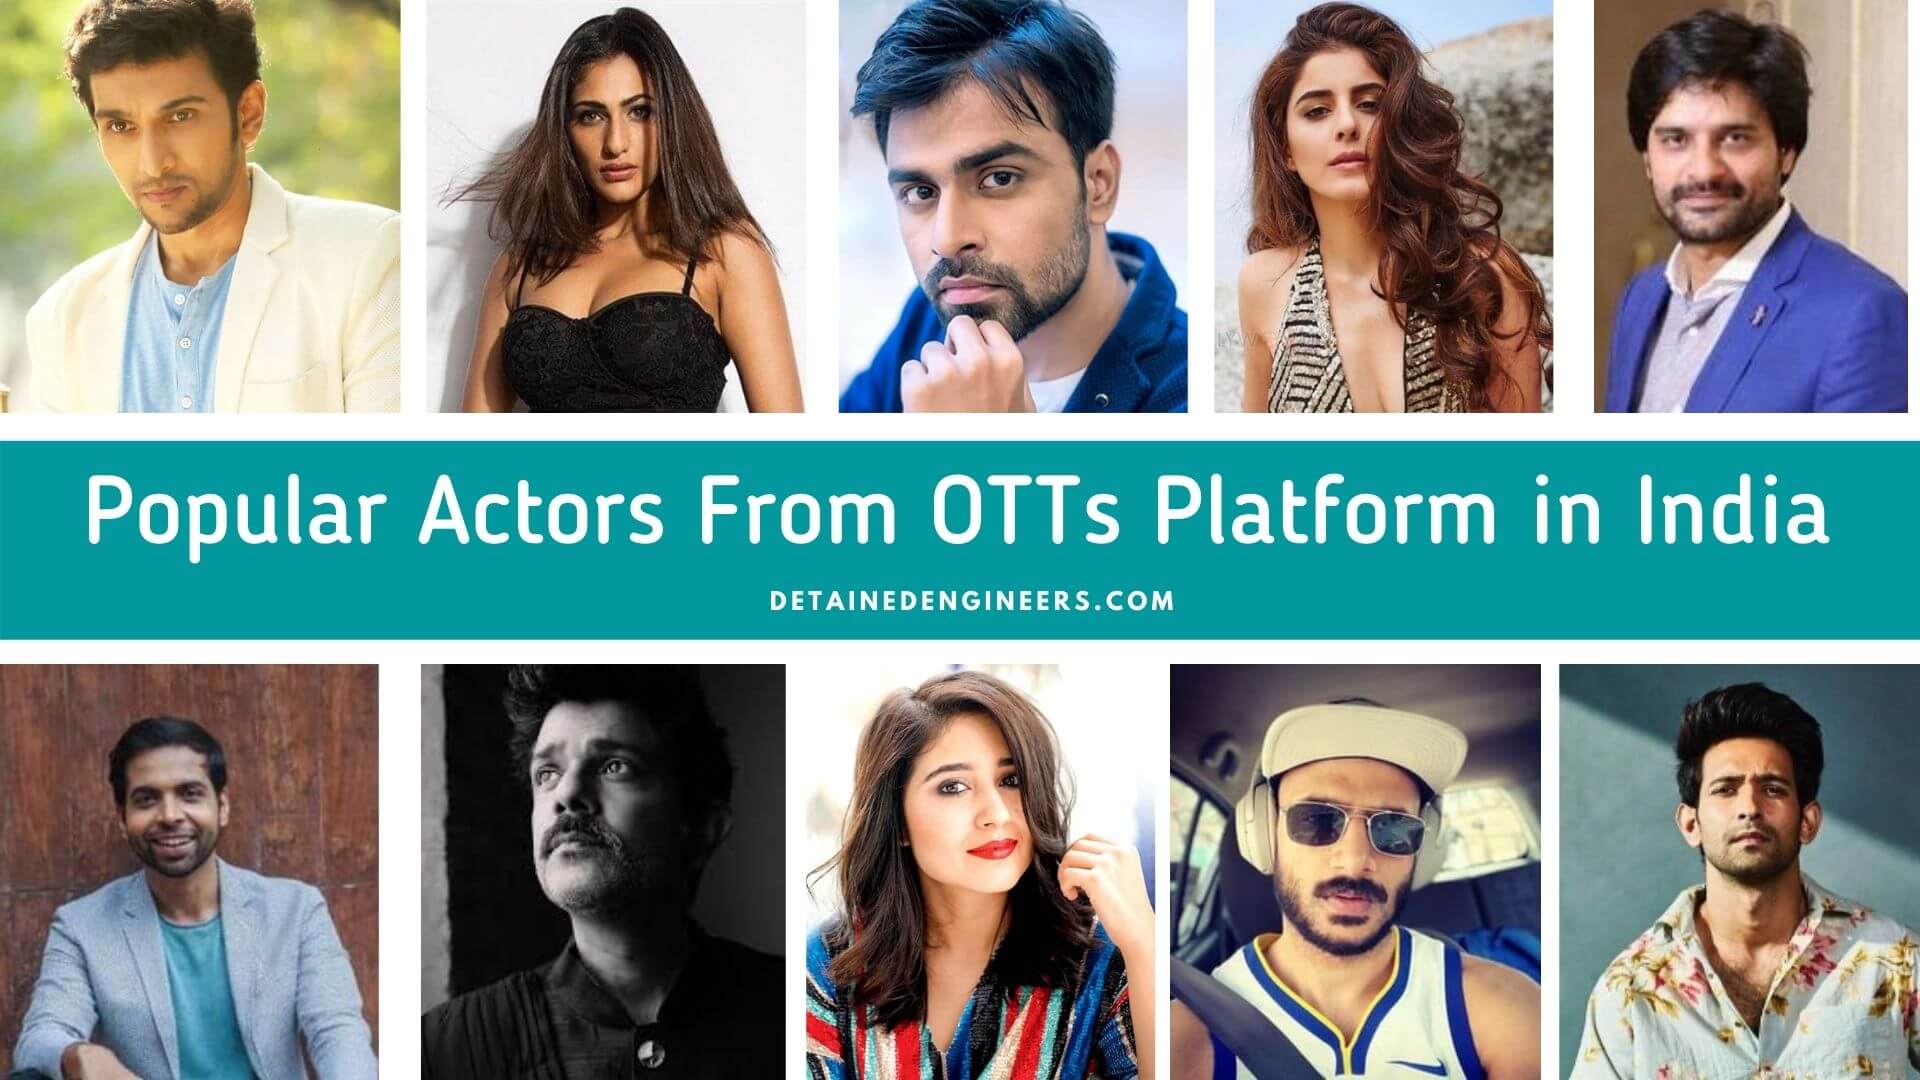 Popular Actors From OTT Platforms in India